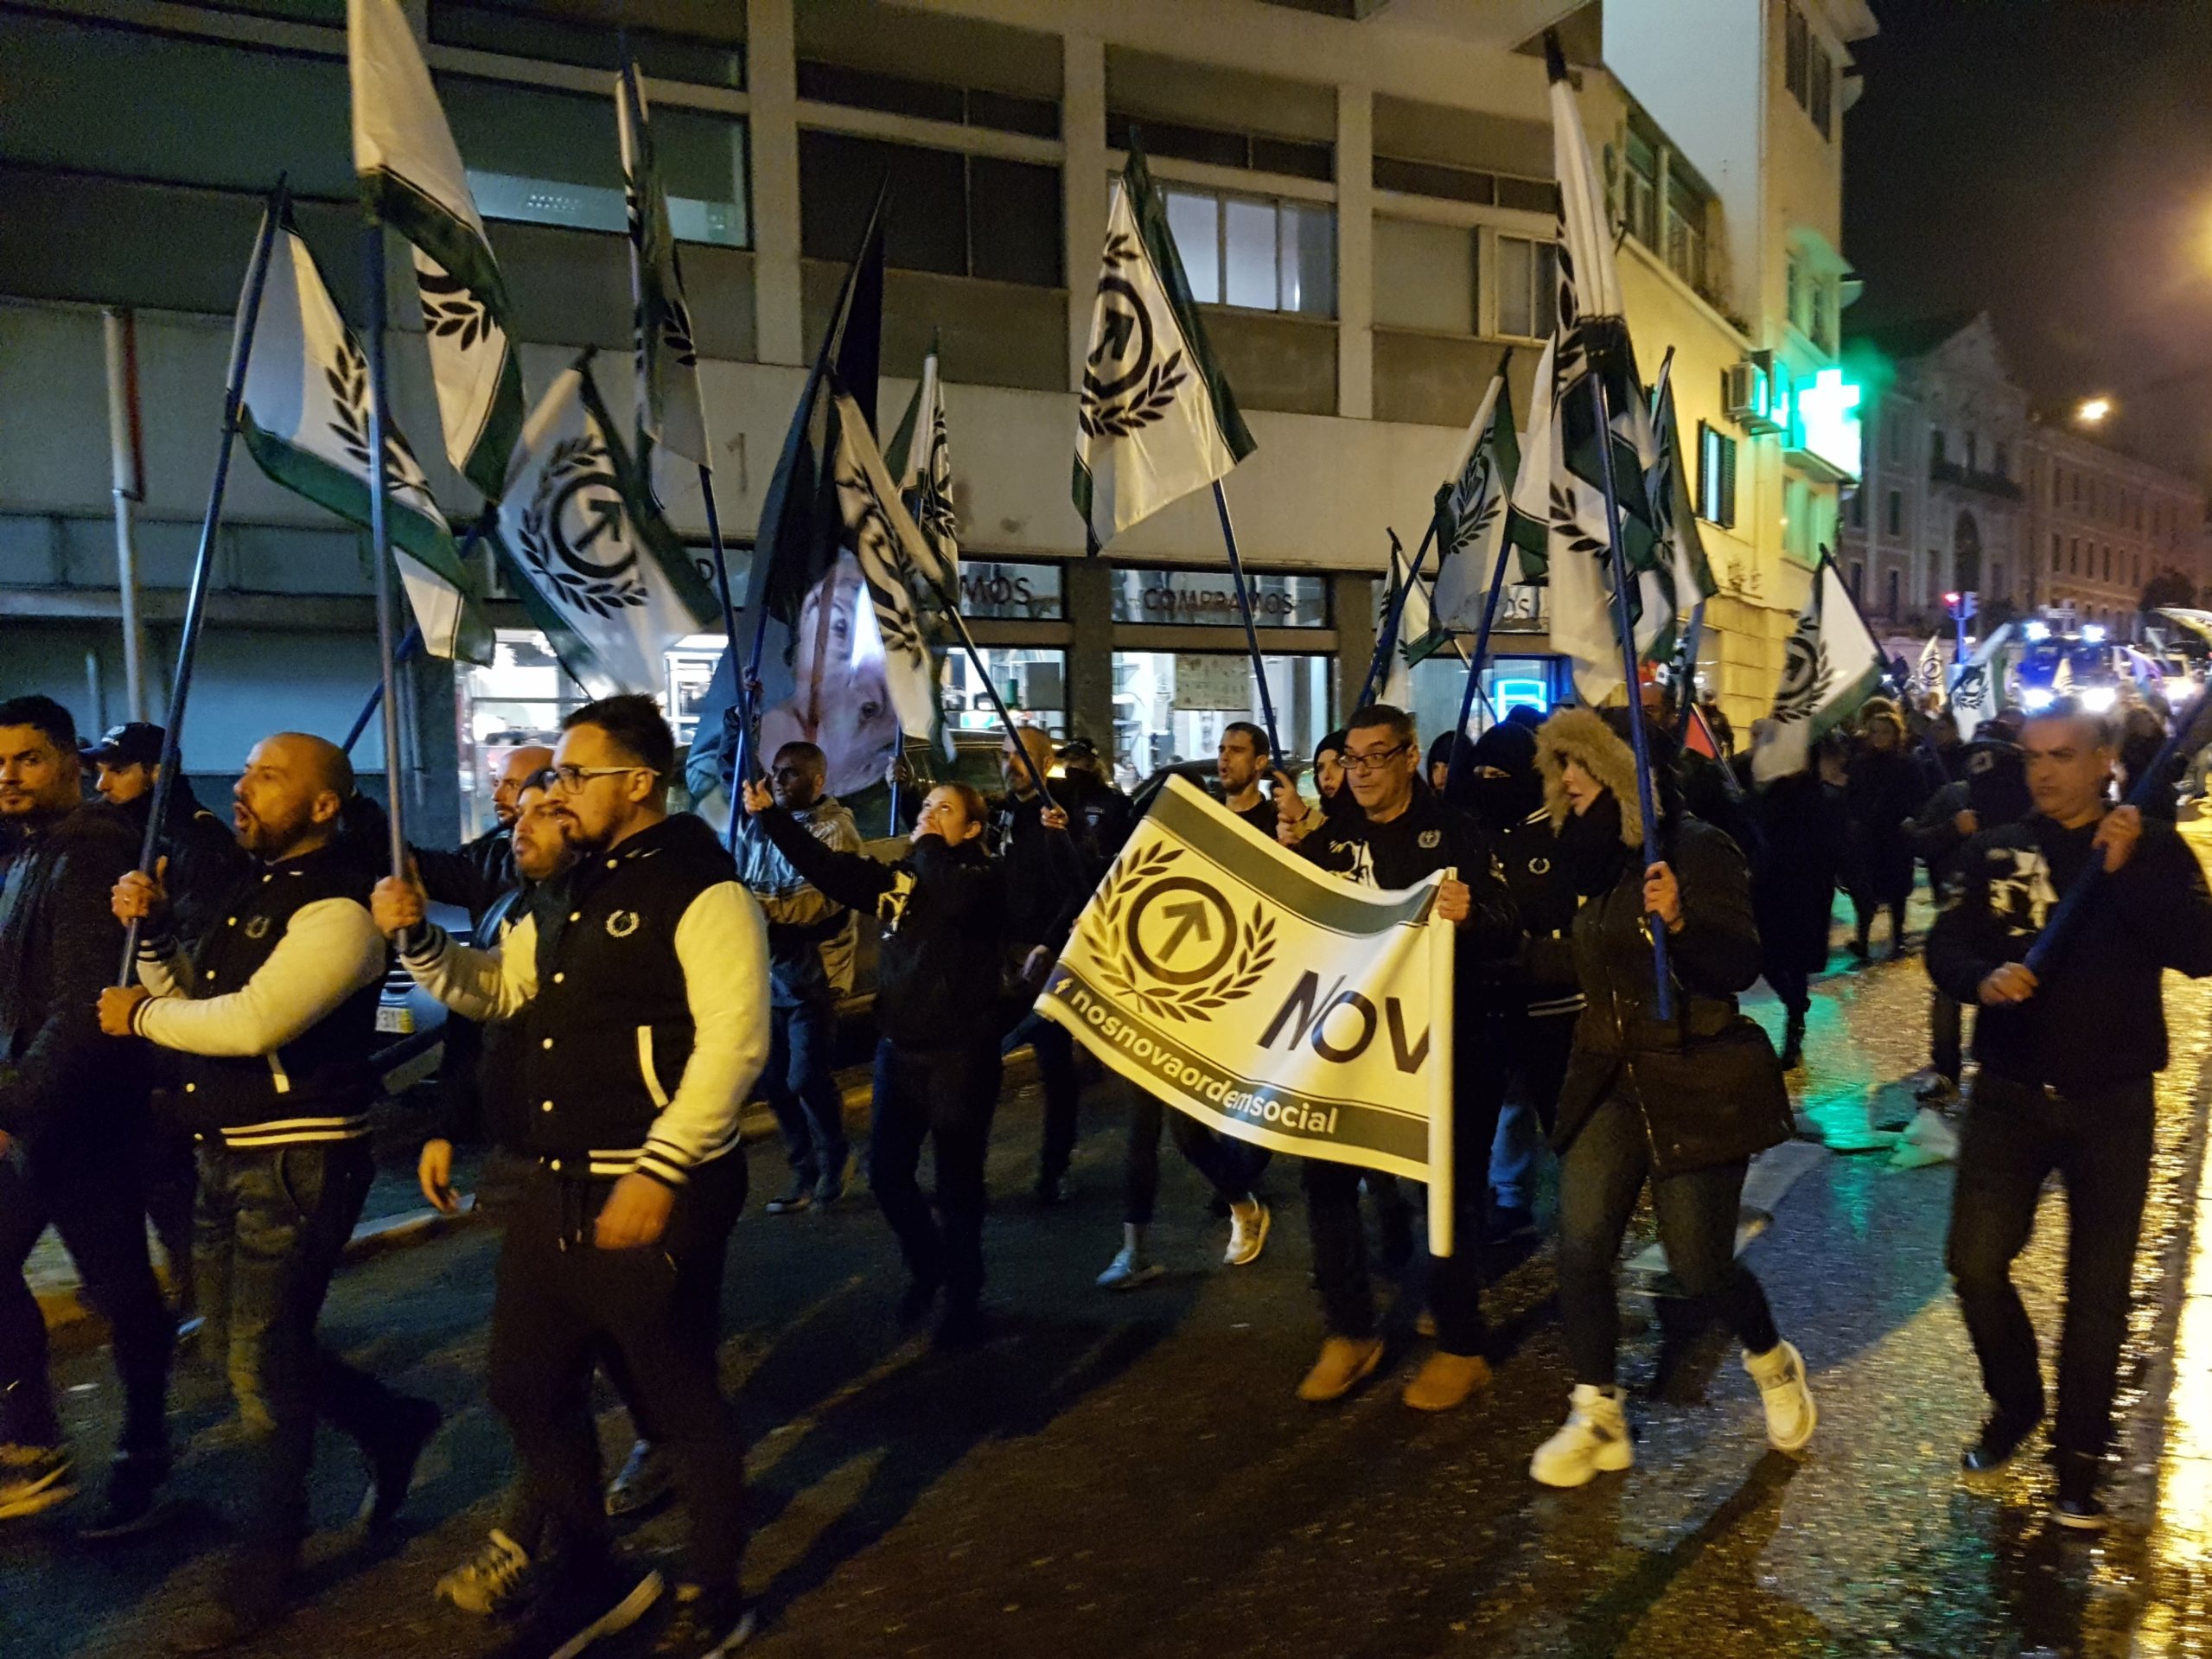 200 nacionalistas marcham por Salazar em Lisboa (fotos) - Página 2 20190222